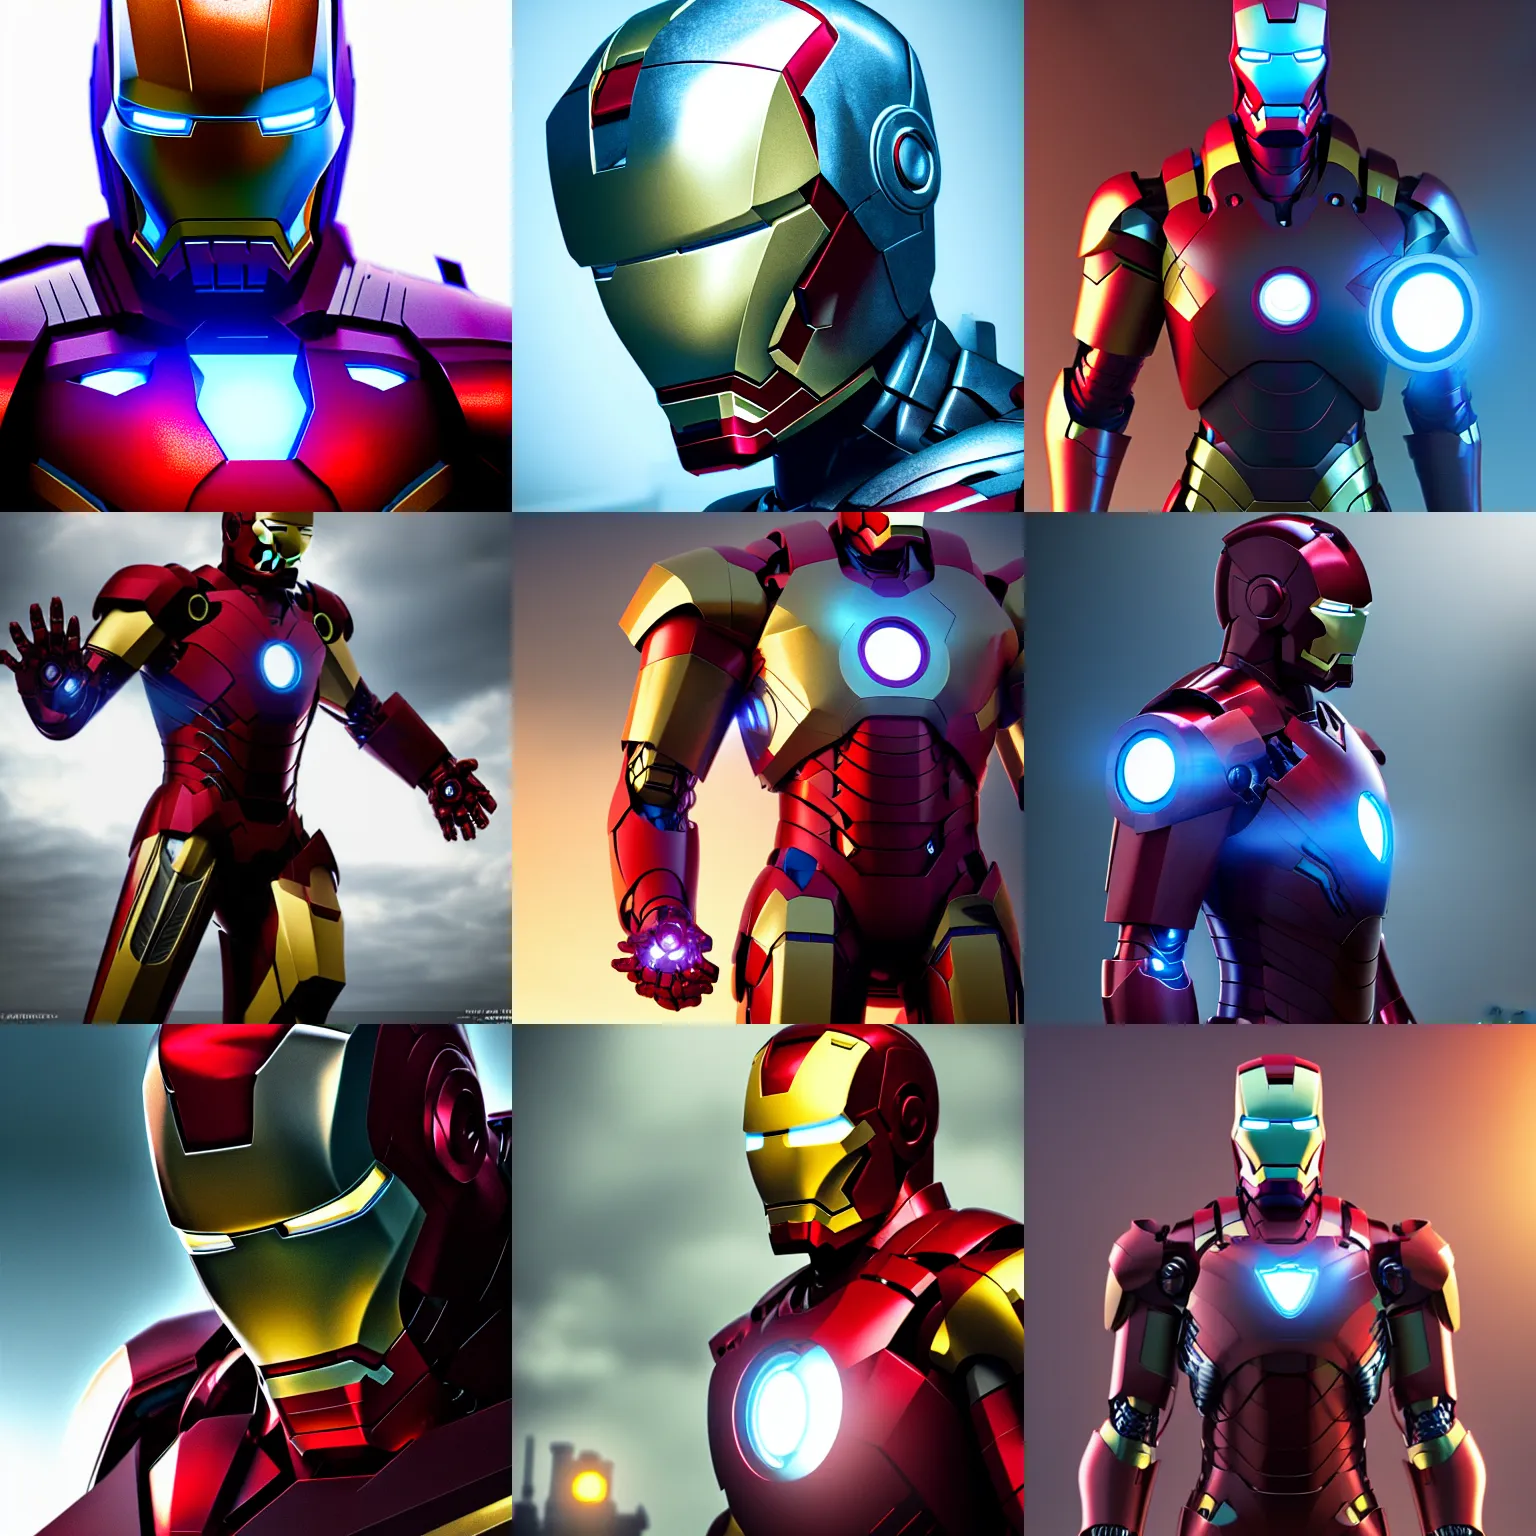 Prompt: cyberpunk knight iron man as knight, DeviantArt, artstation, 3D realism, 8k HD render, epic lighting, depth of field